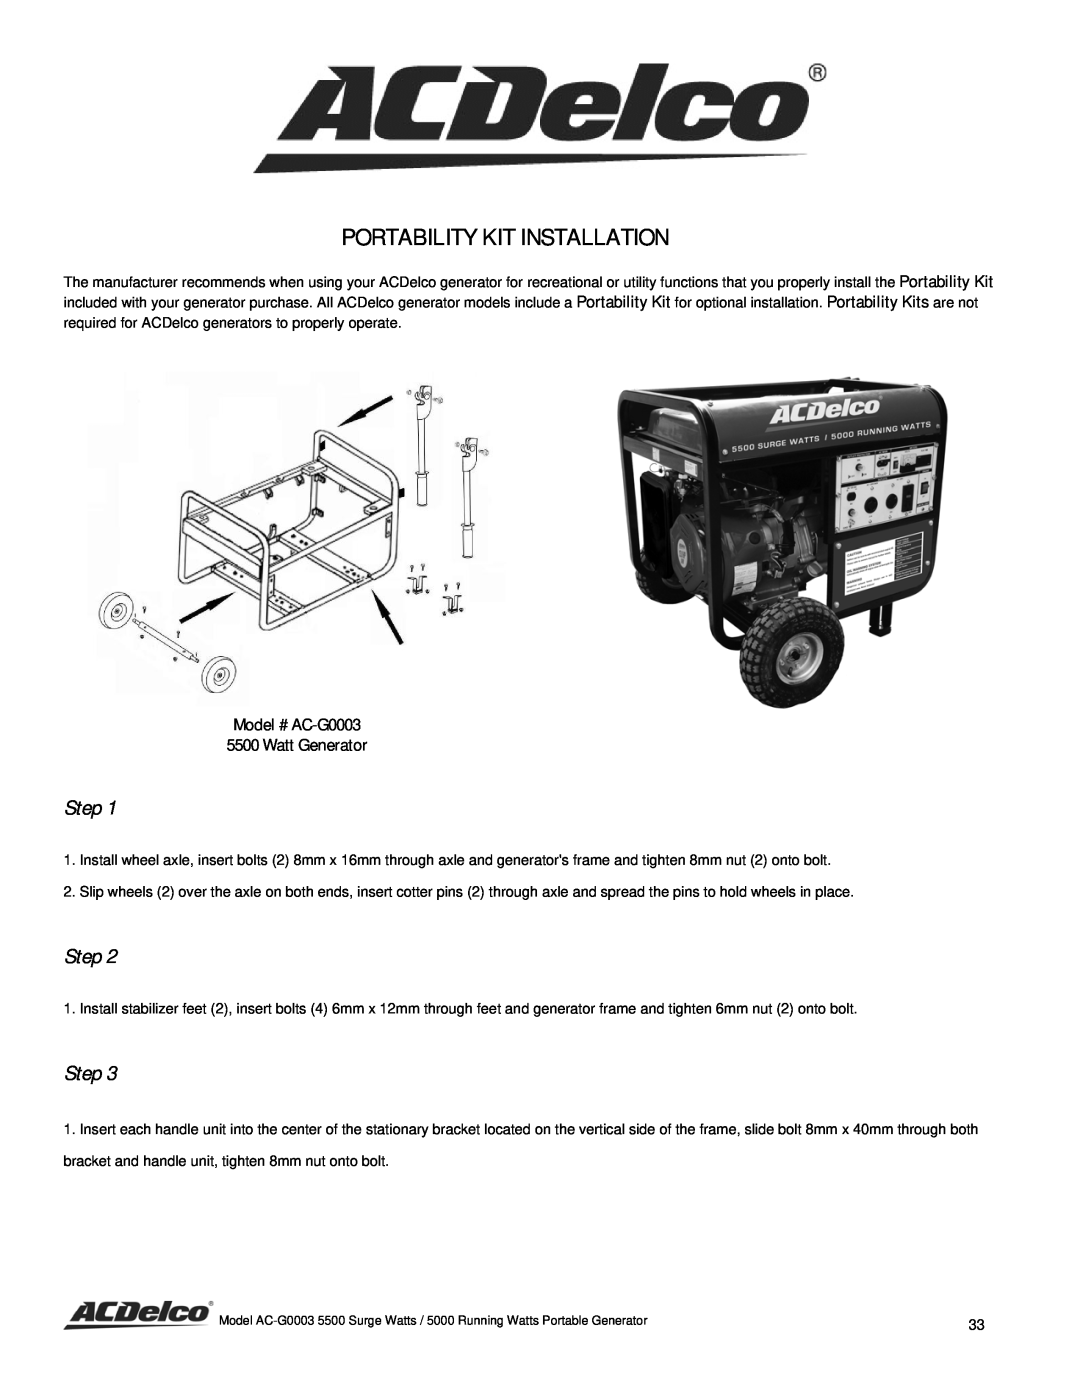 ACDelco instruction manual Portability Kit Installation, Step, Model # AC-G0003 5500 Watt Generator 